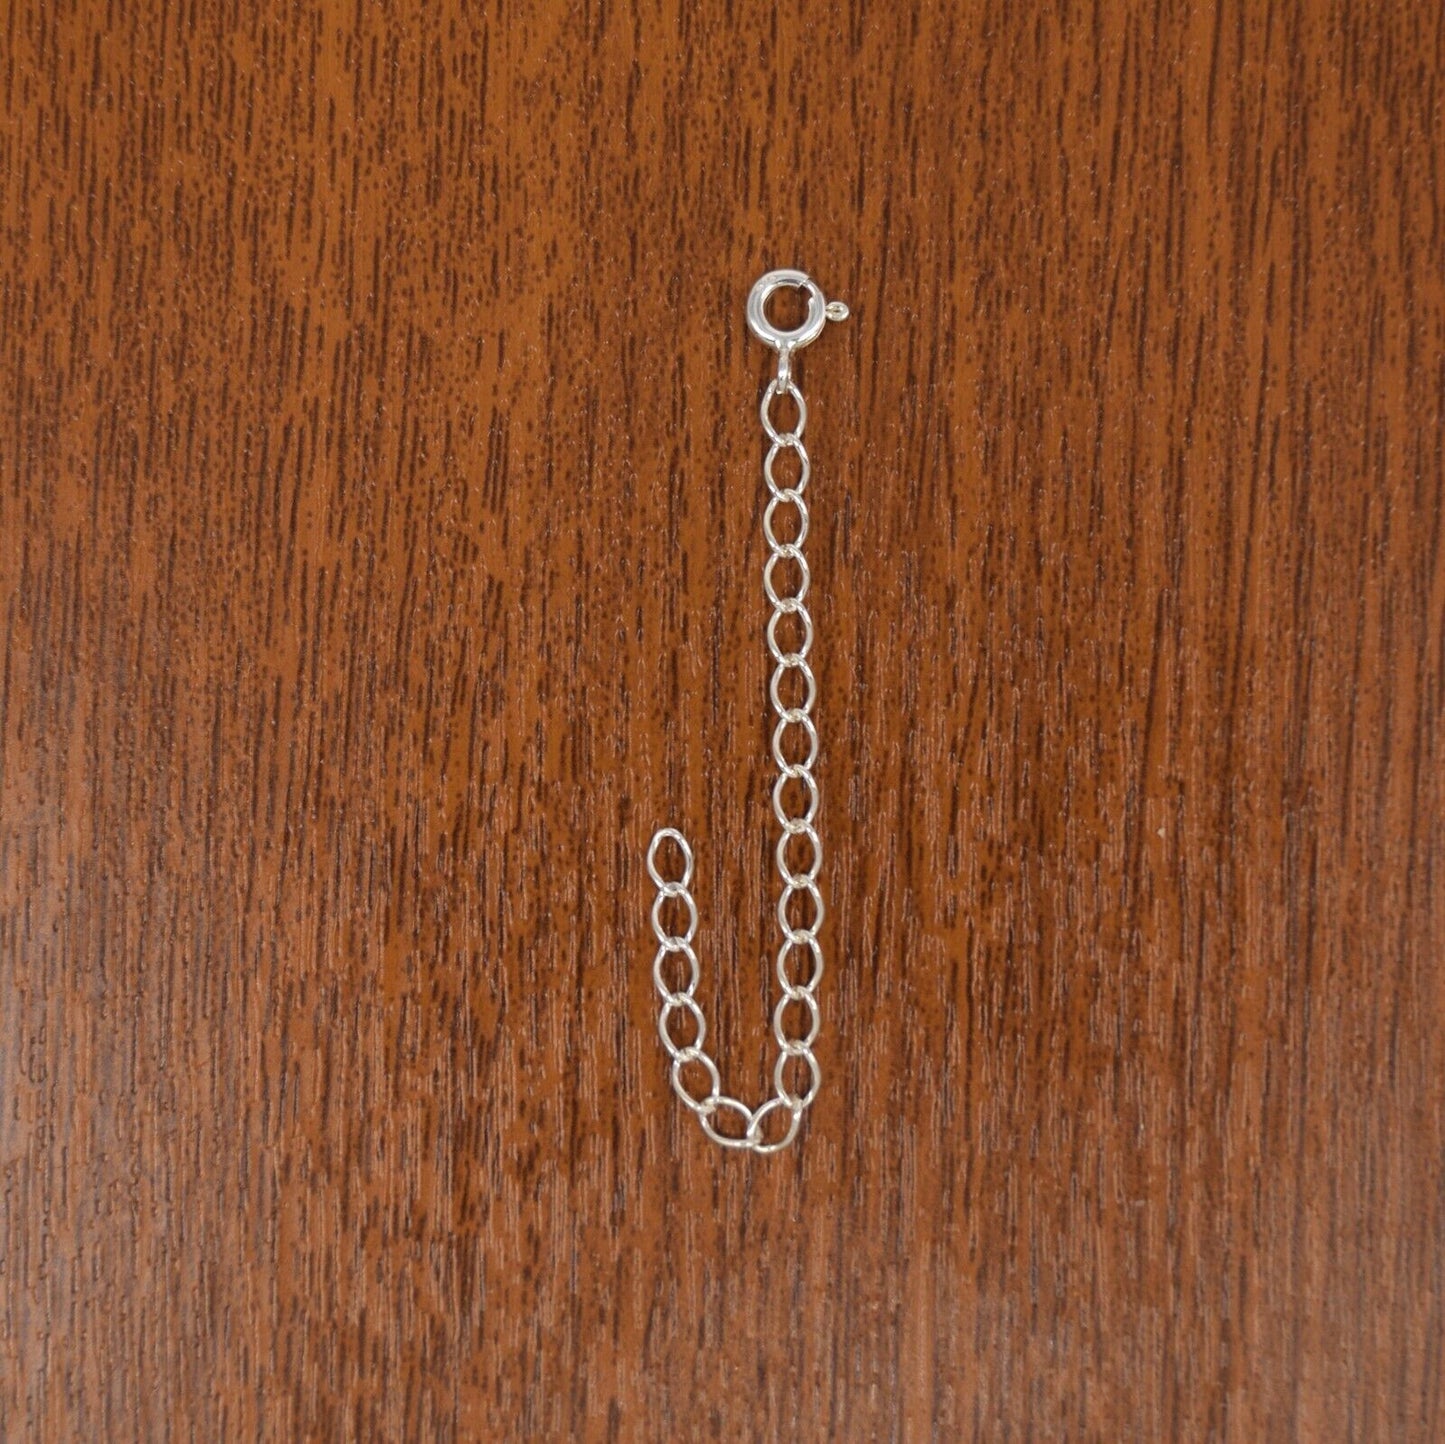 Genuine 925 Sterling Silver 3" CHAIN EXTENDER 7.5cm Necklace Bracelet Extension